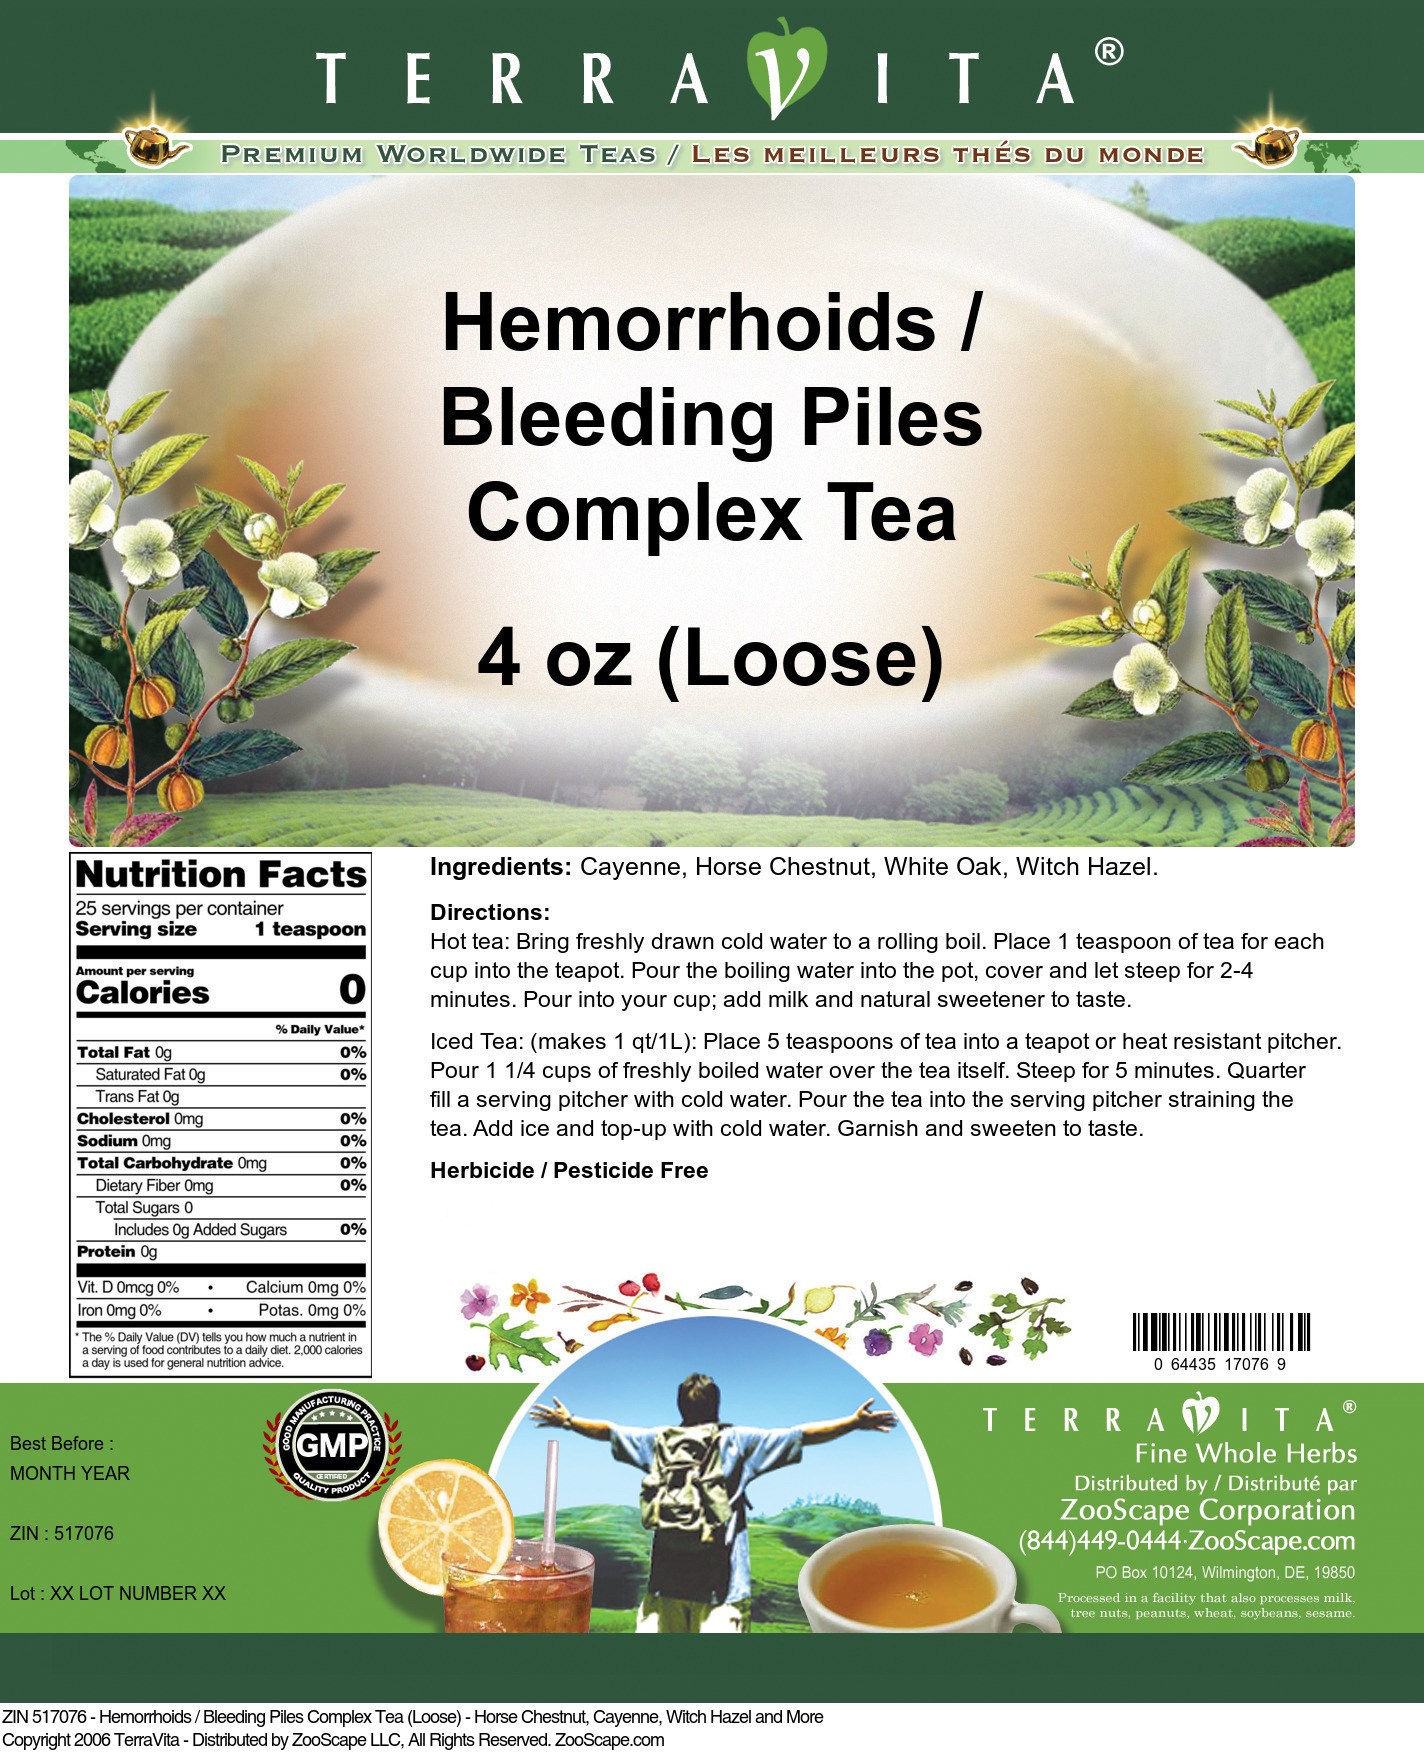 Hemorrhoids / Bleeding Piles Complex Tea (Loose) - Horse Chestnut, Cayenne, Witch Hazel and More - Label